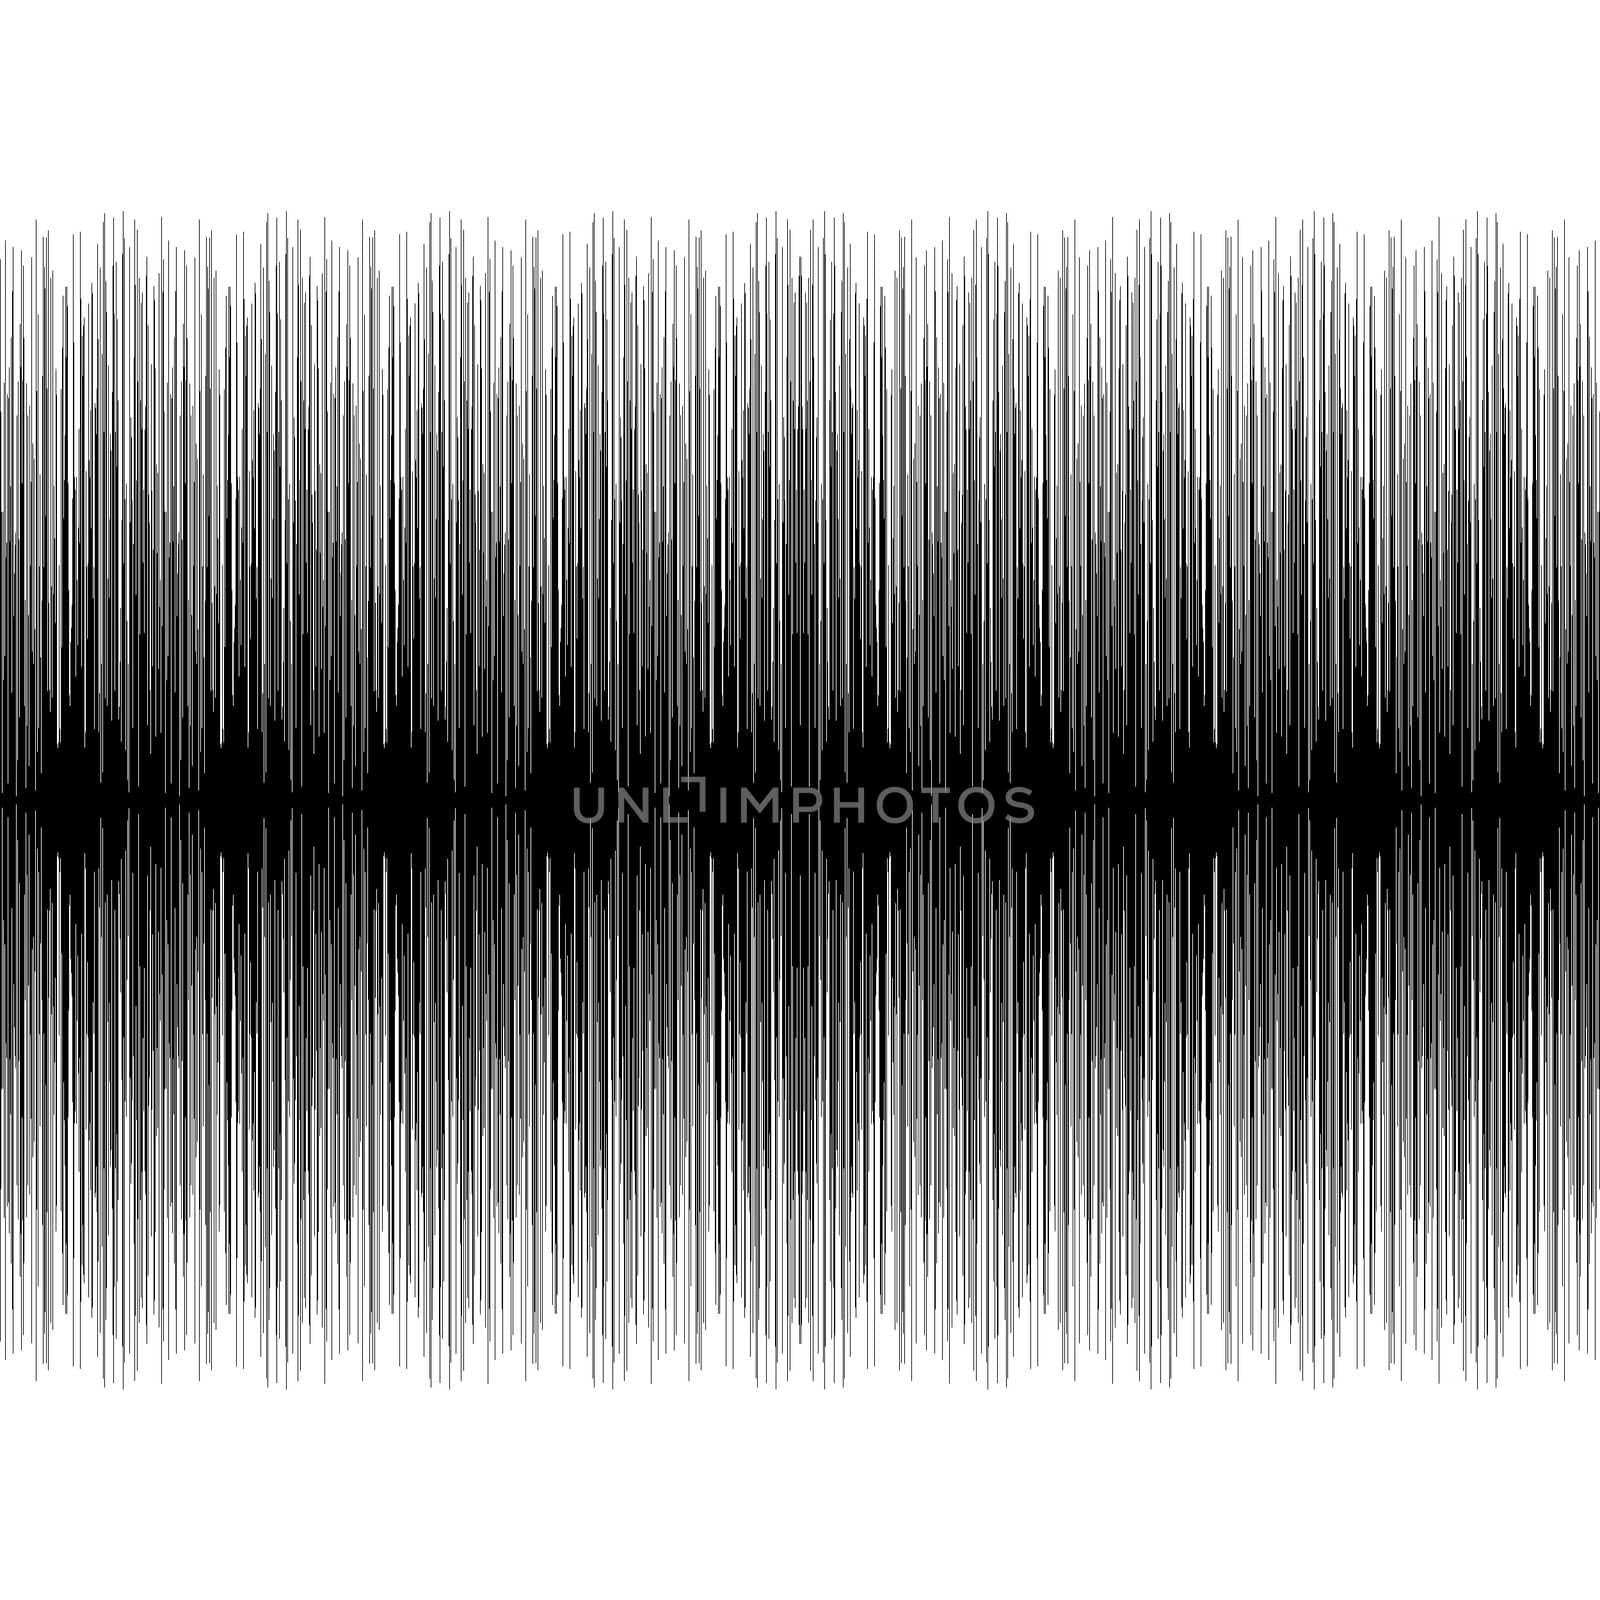 Sound Wave by Georgios